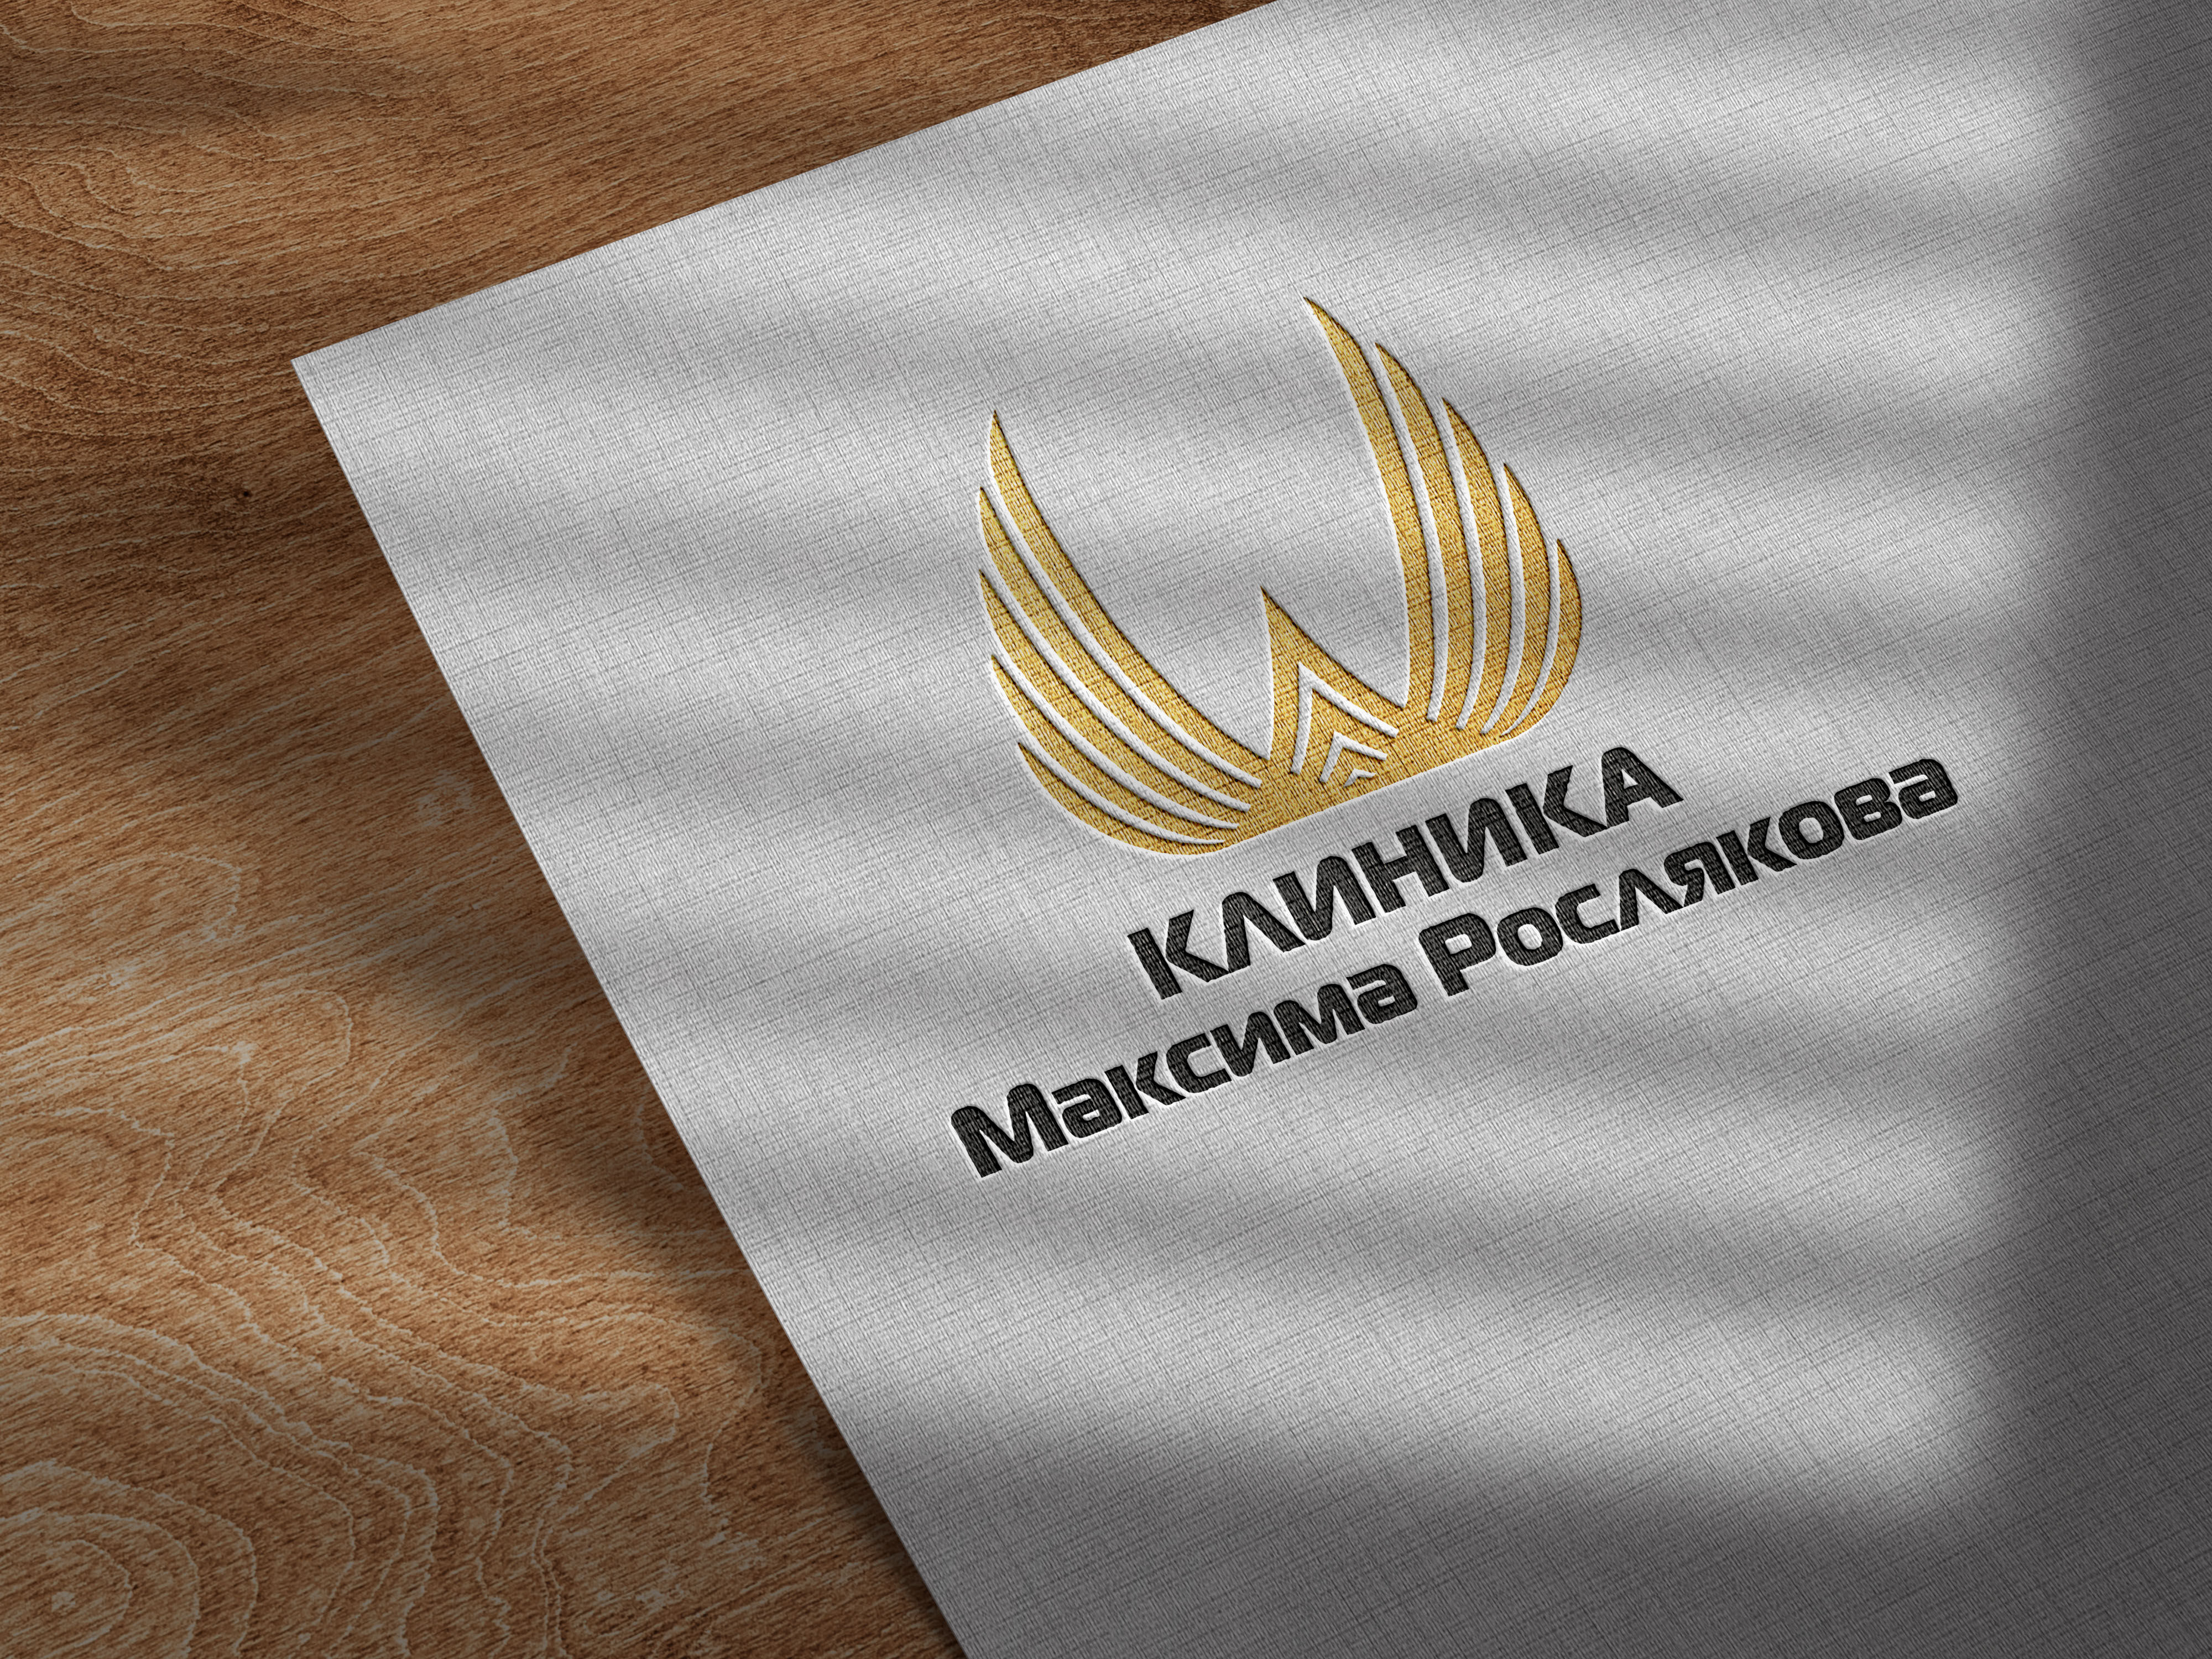 Разработка Логотипа за 3 000 руб.